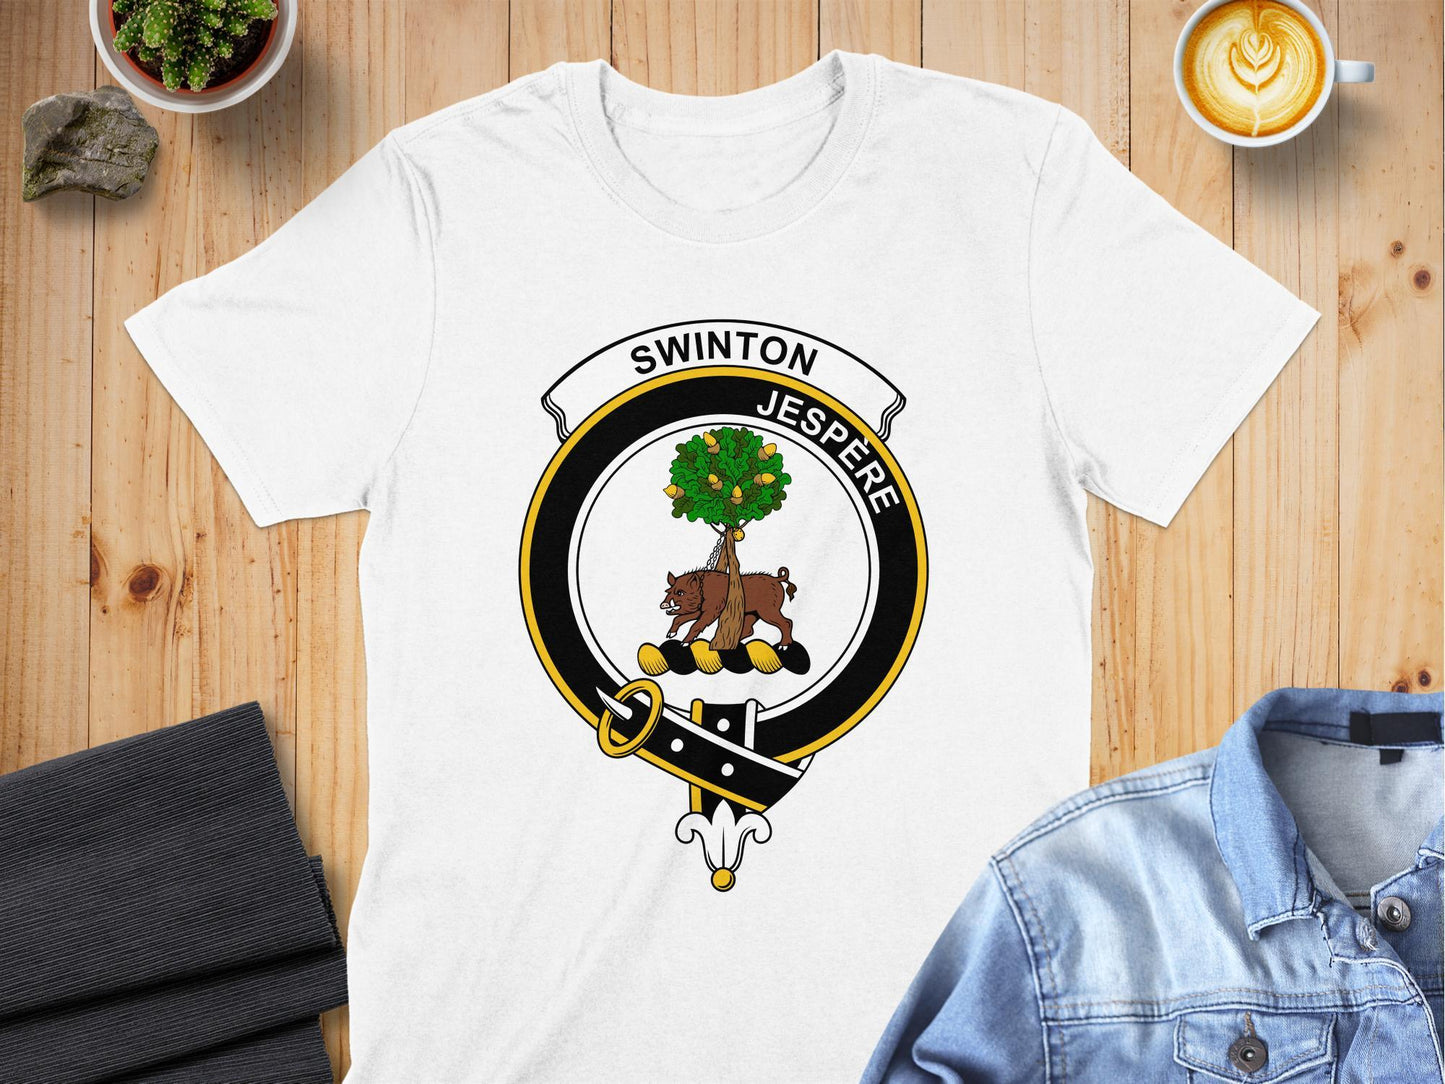 Scottish Clan Crest Swinton Jespere Highland T-Shirt - Living Stone Gifts